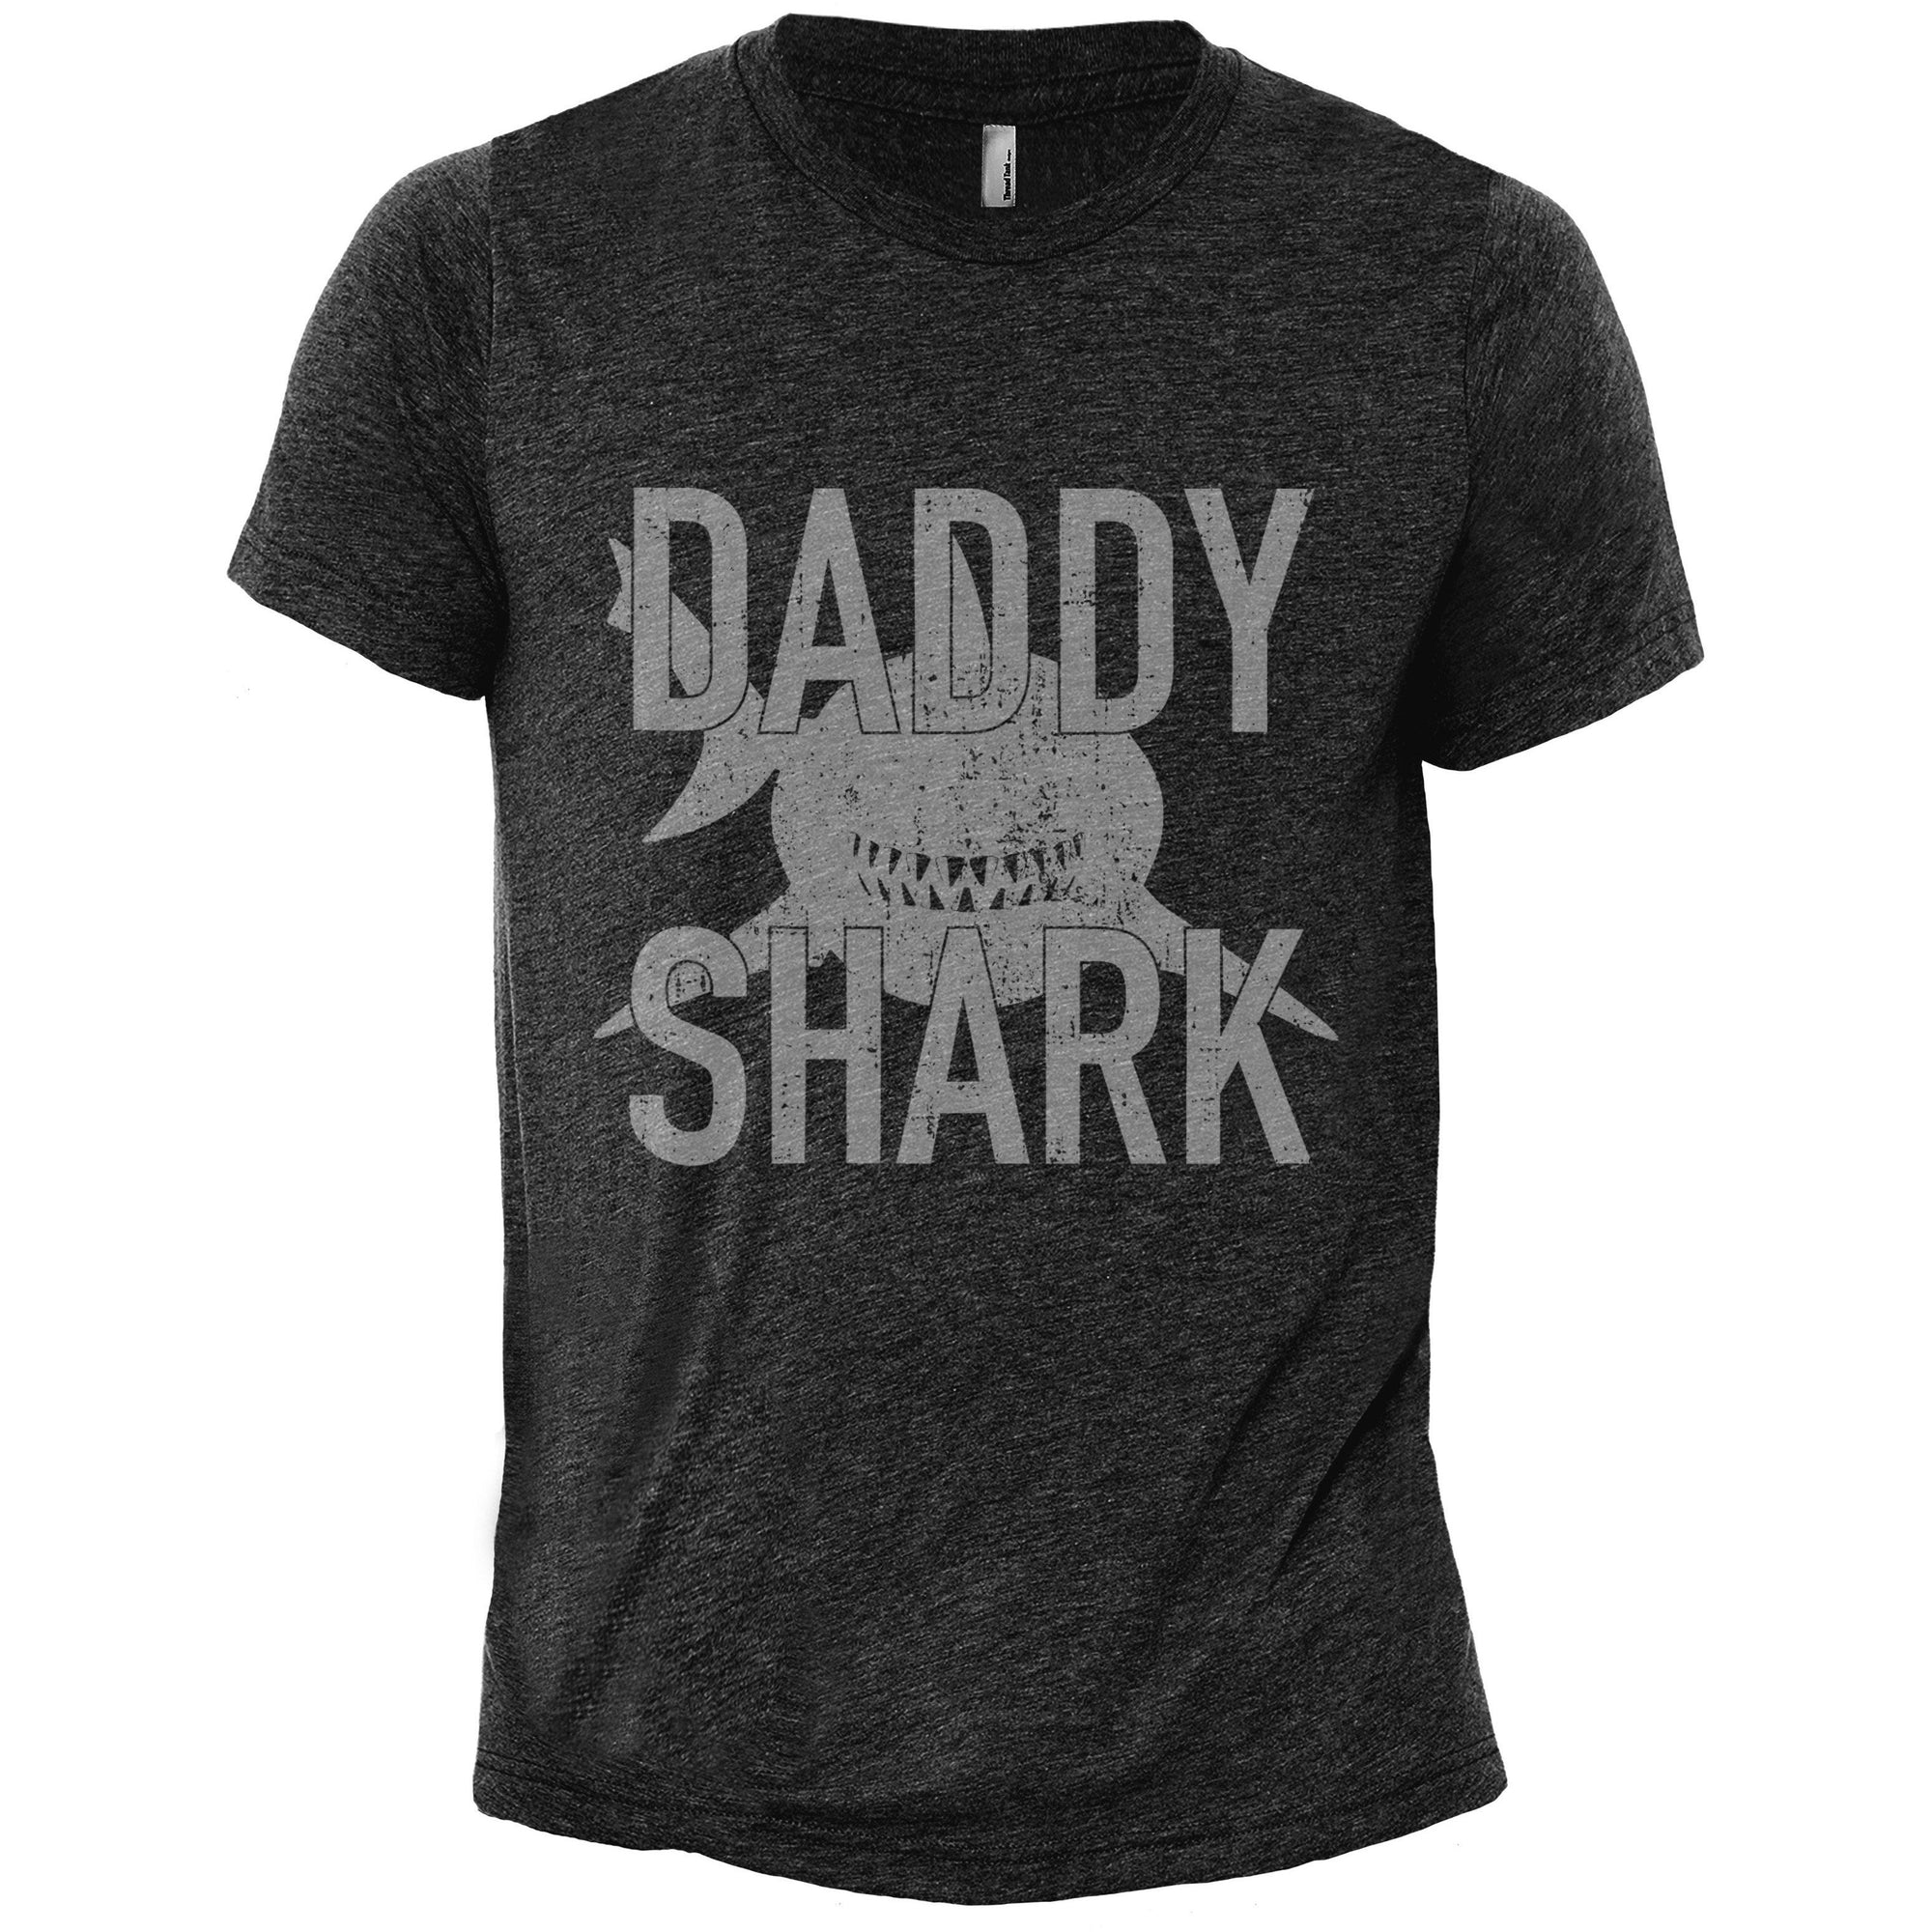 Daddy Shark Heather Grey Printed Graphic Men's Crew T-Shirt Tee